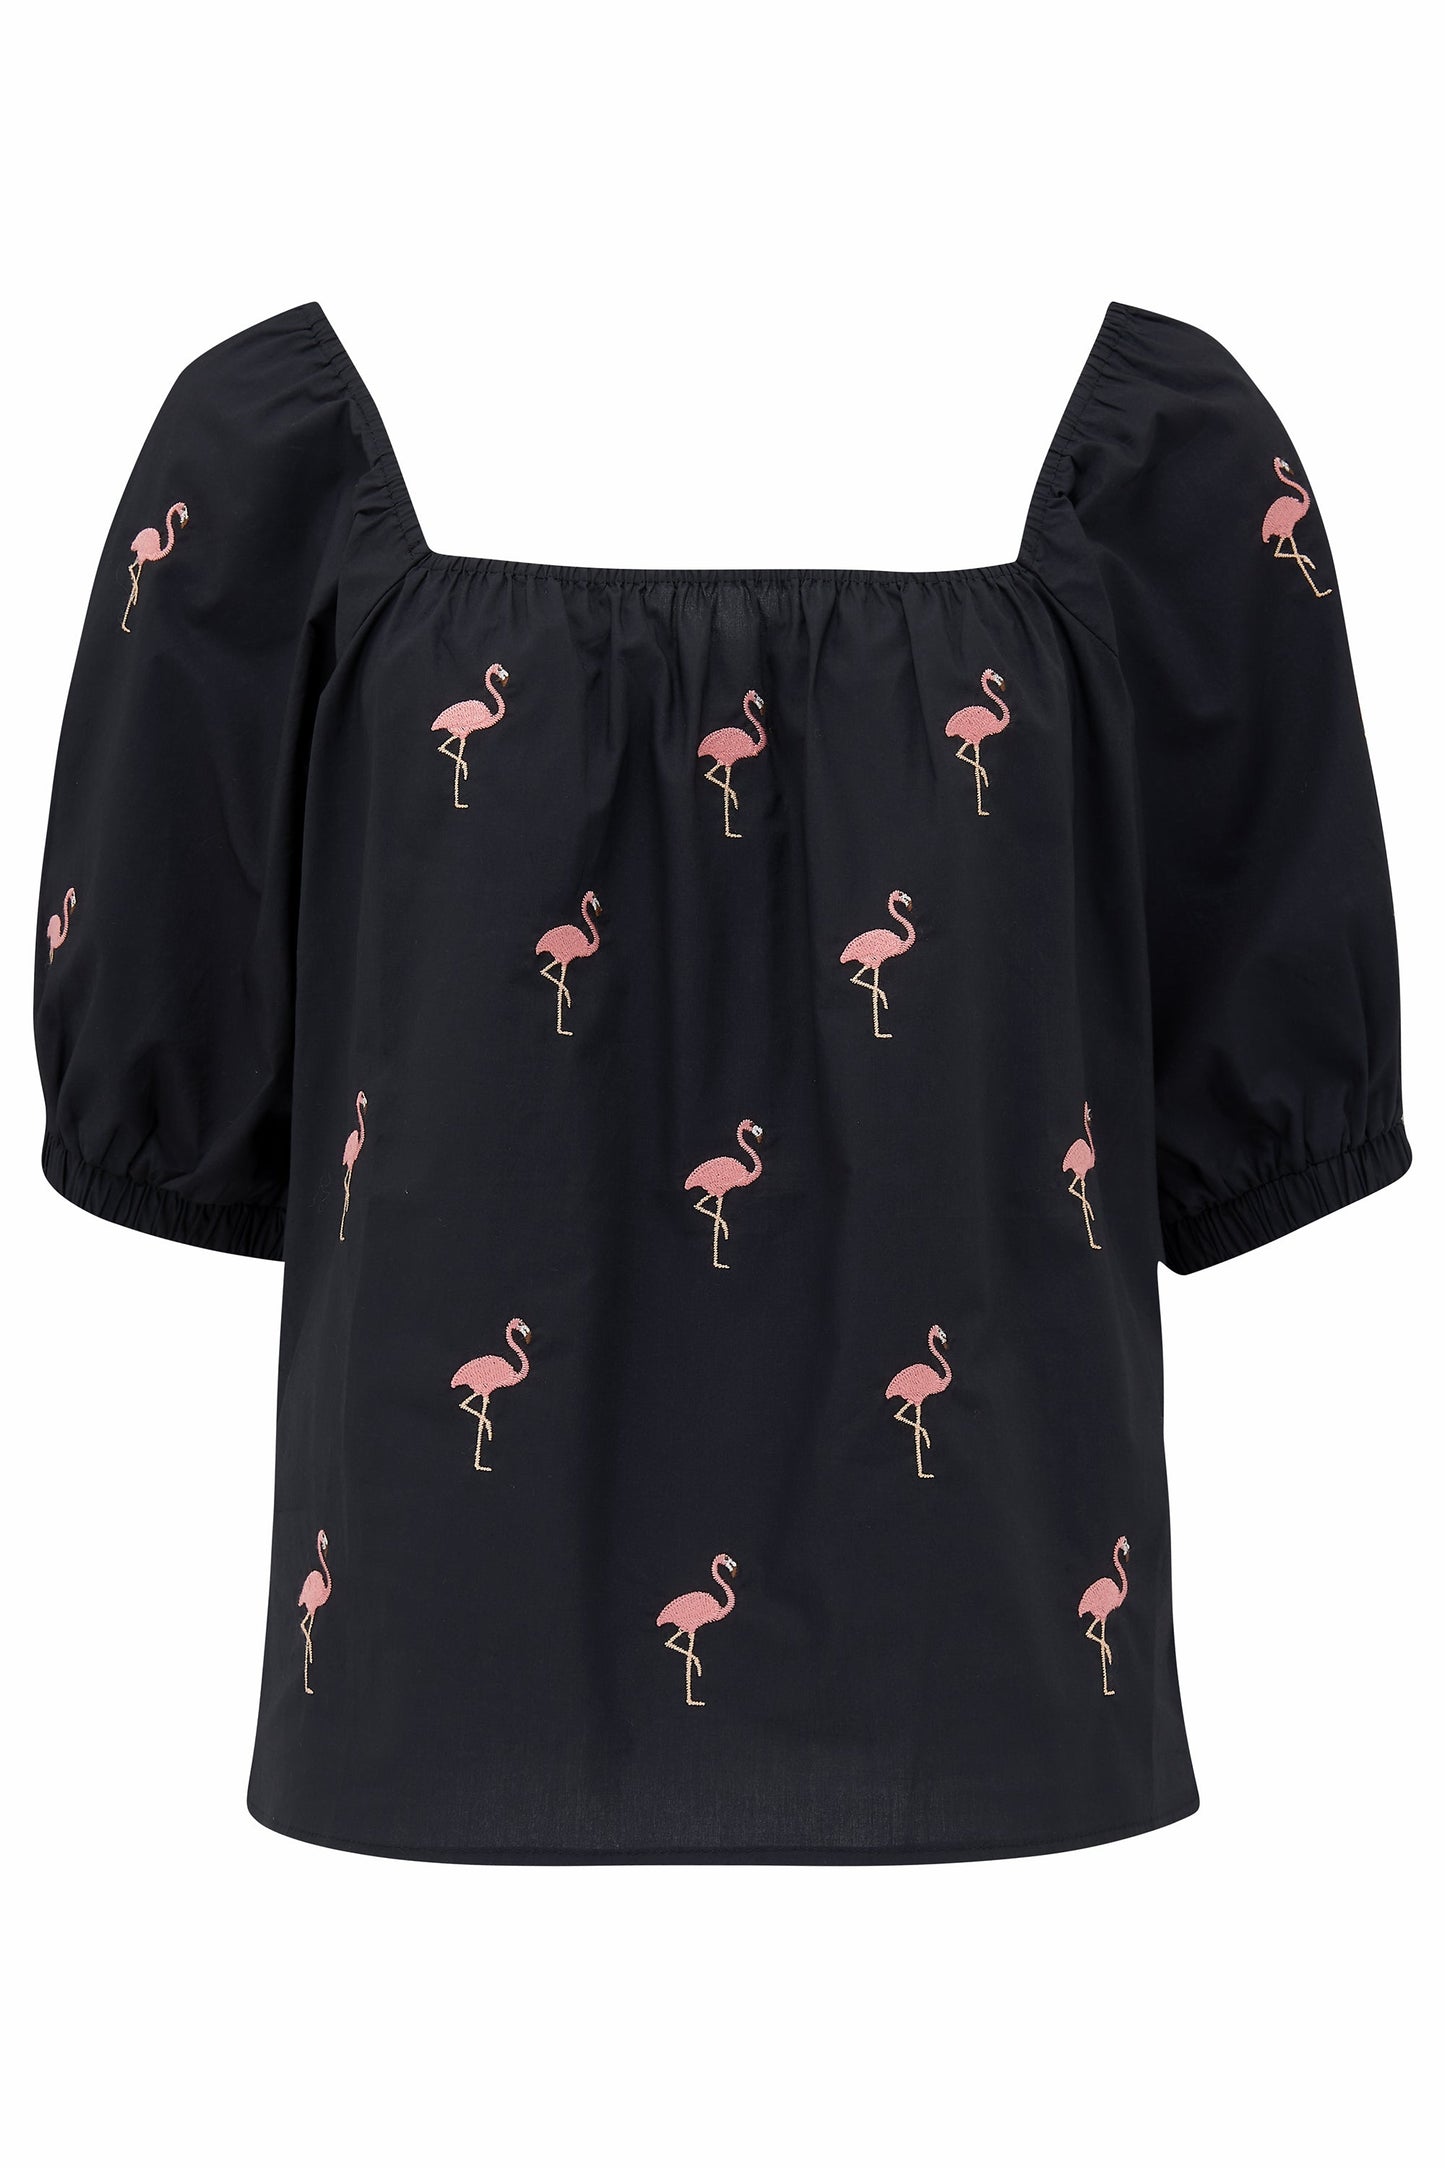 *Gerdie Embroidered Top Black Flamingo*i